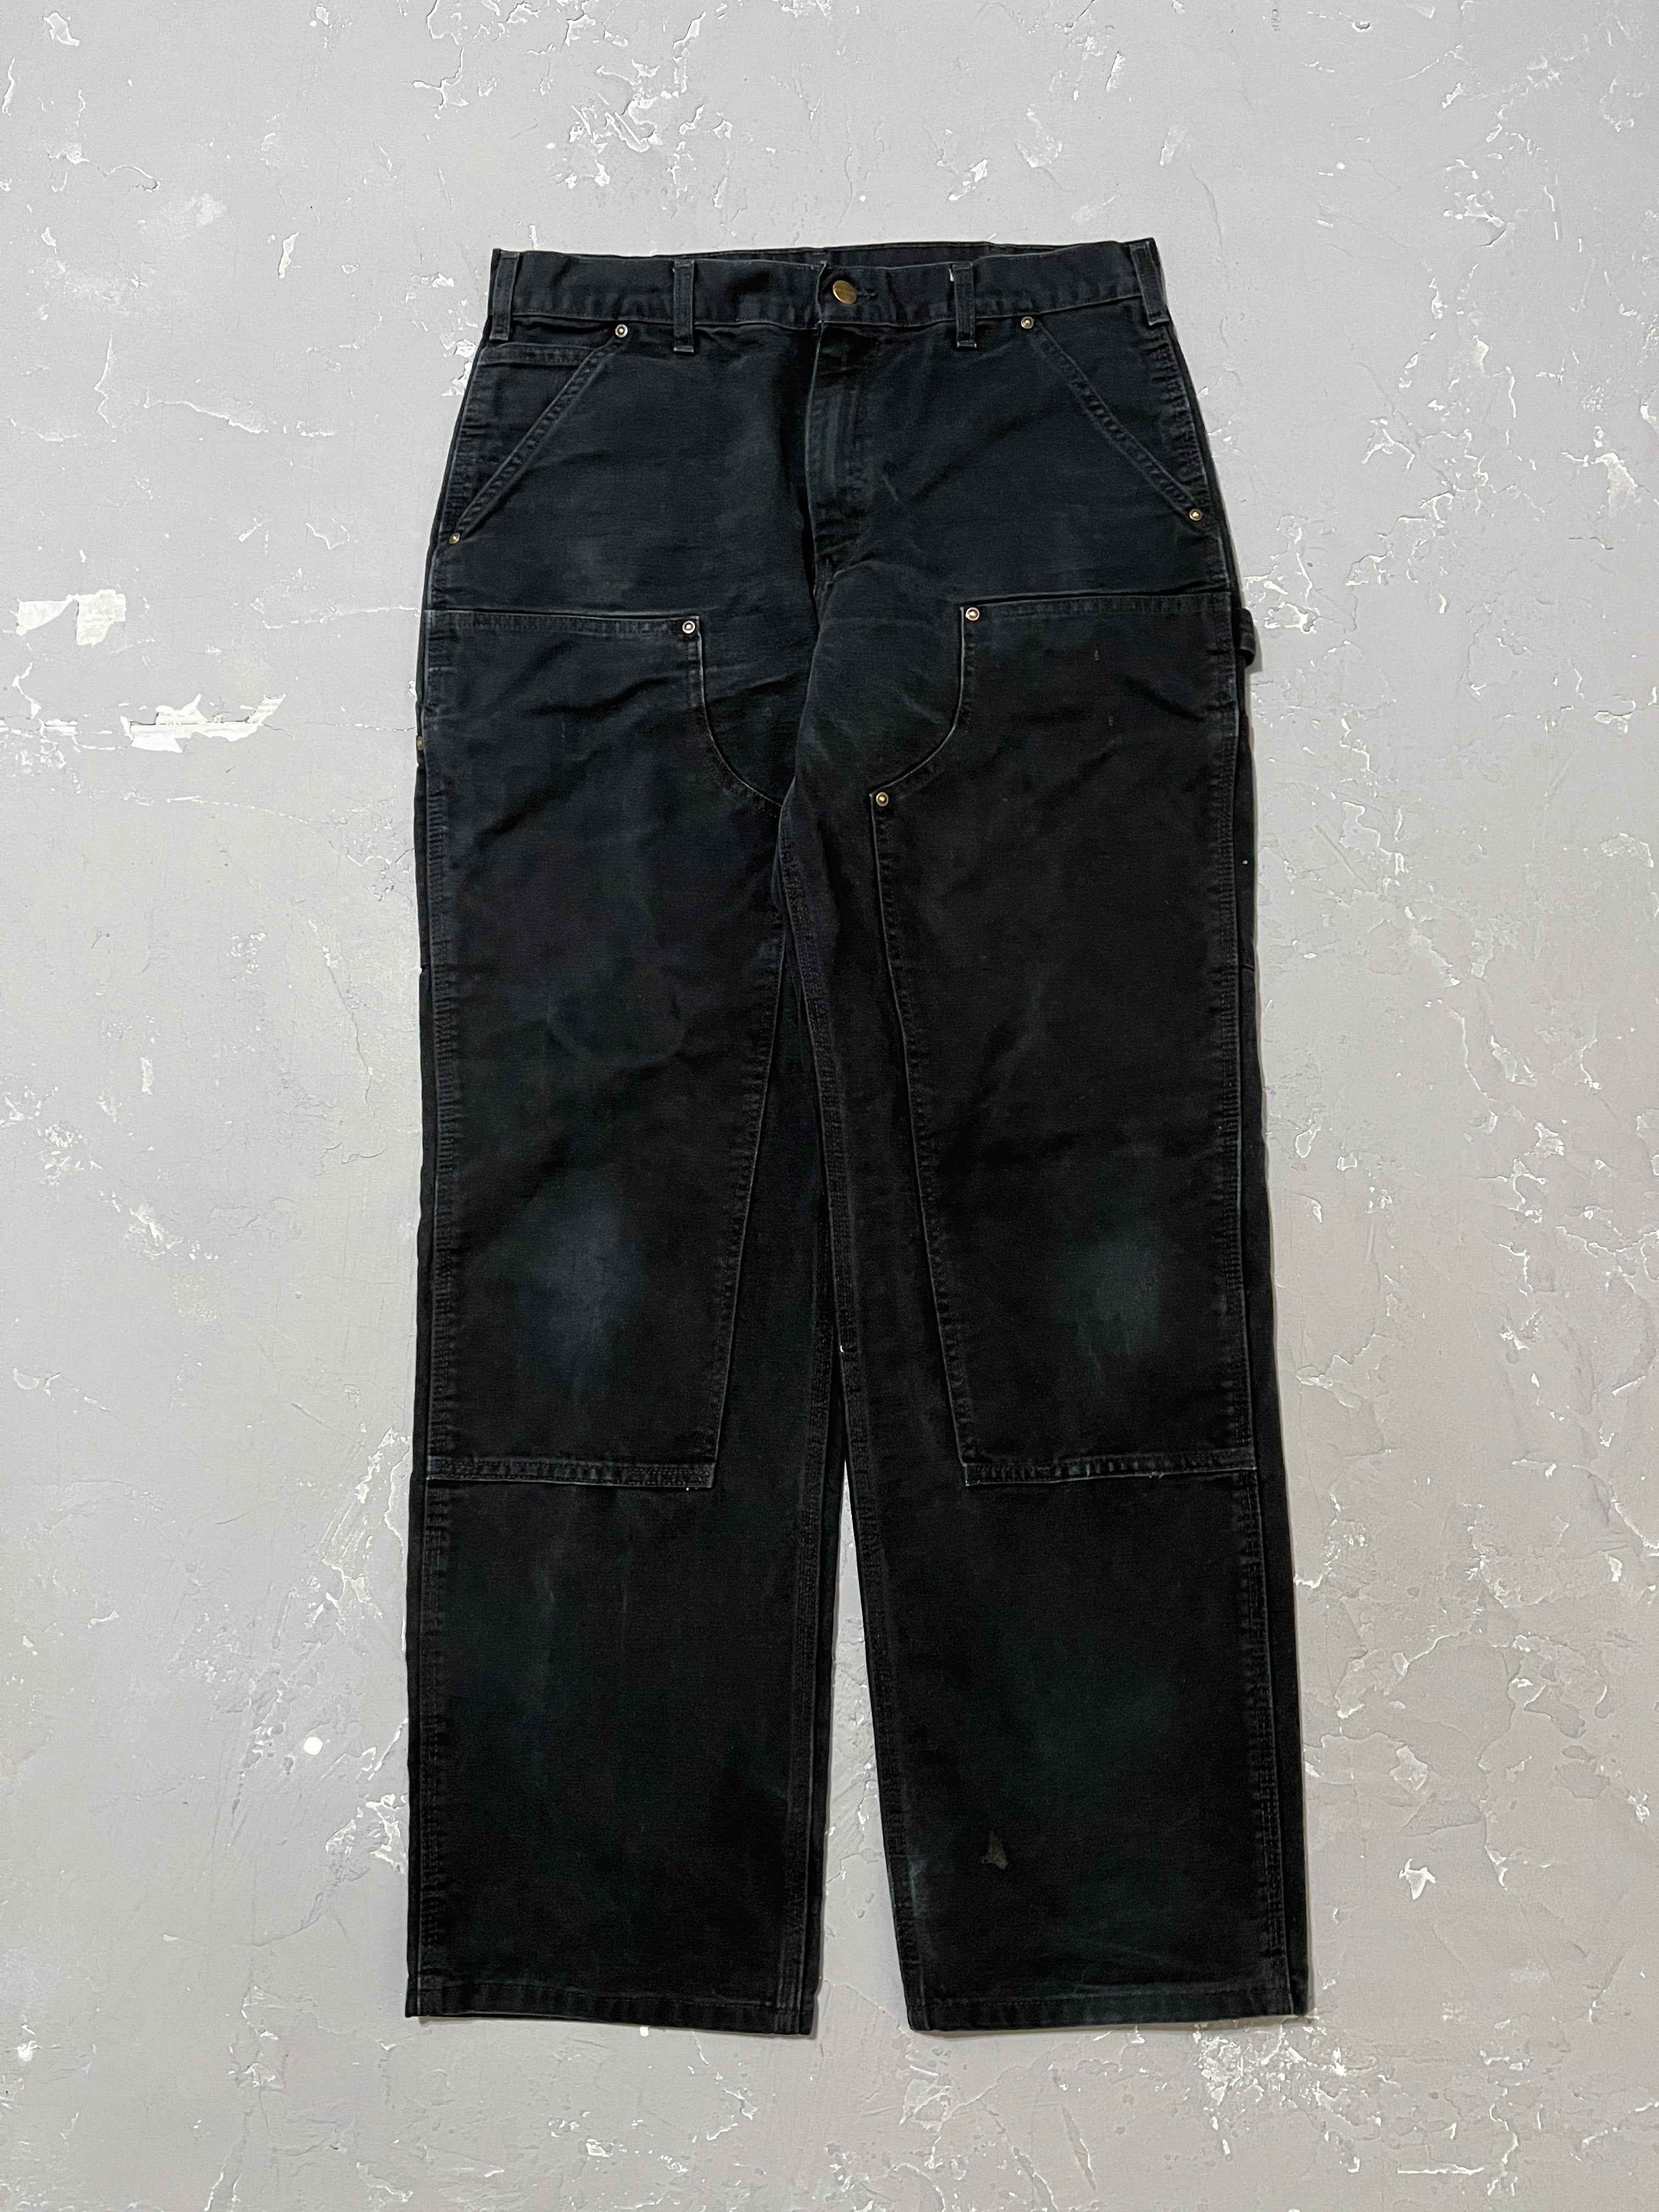 Carhartt Faded Black Double Knee Pants [33 x 32]